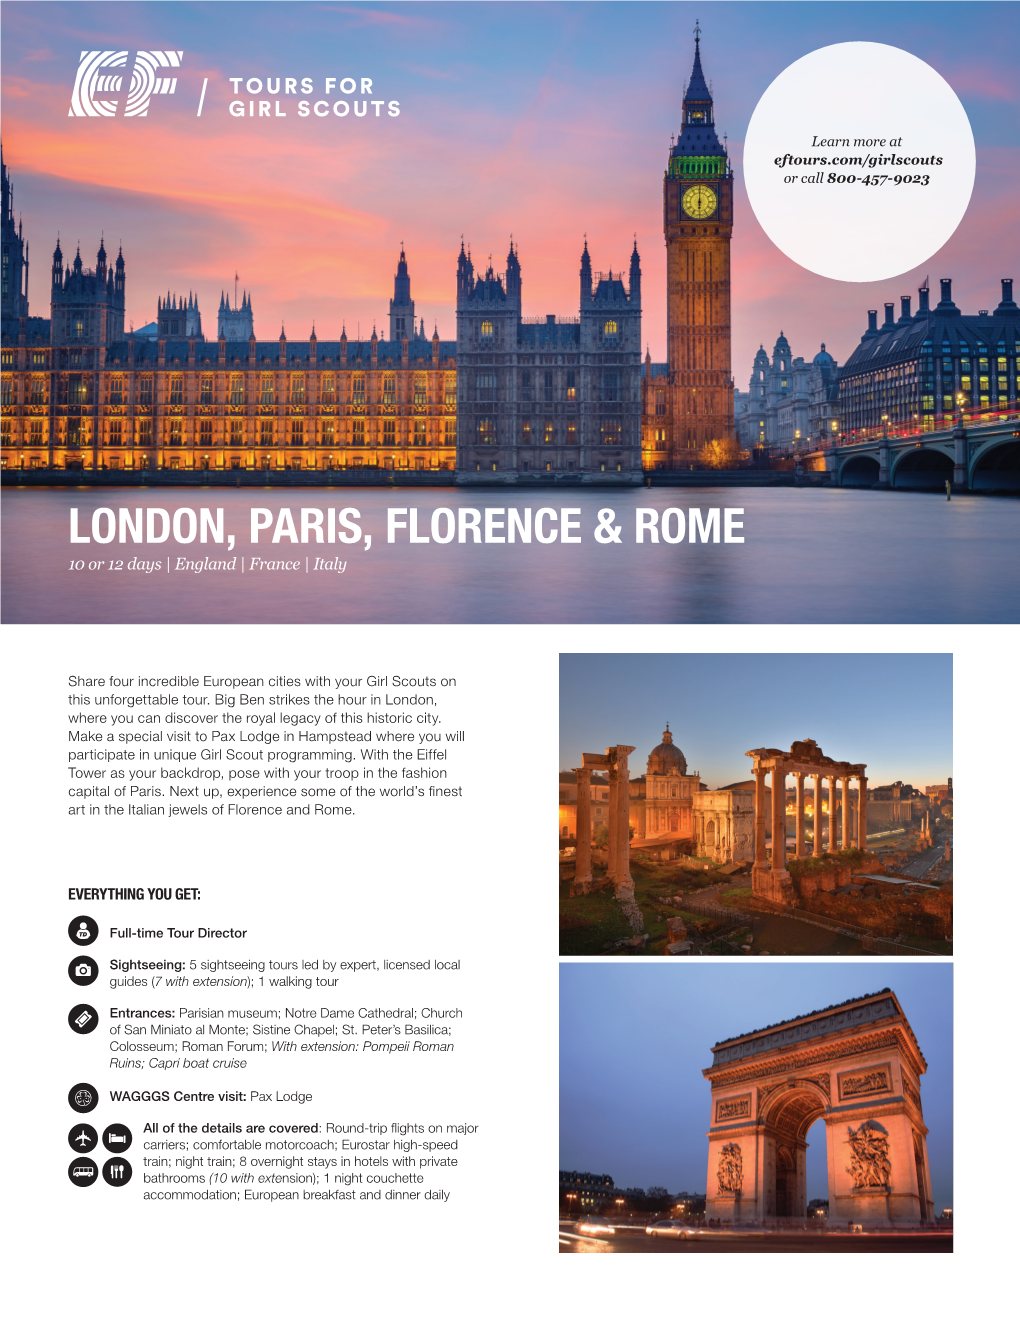 London, Paris, Florence & Rome